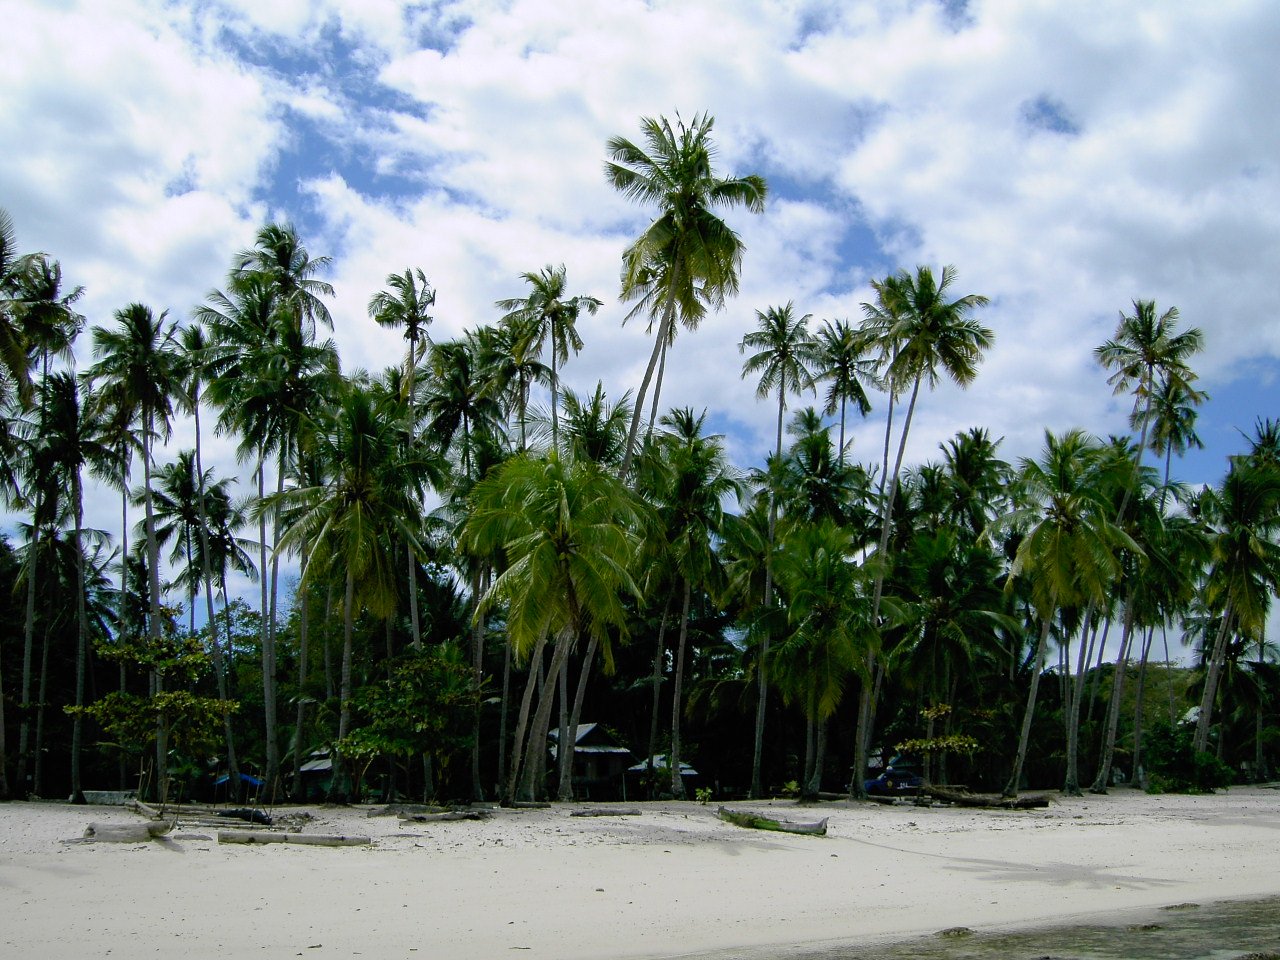 a couple of palm trees on a beach